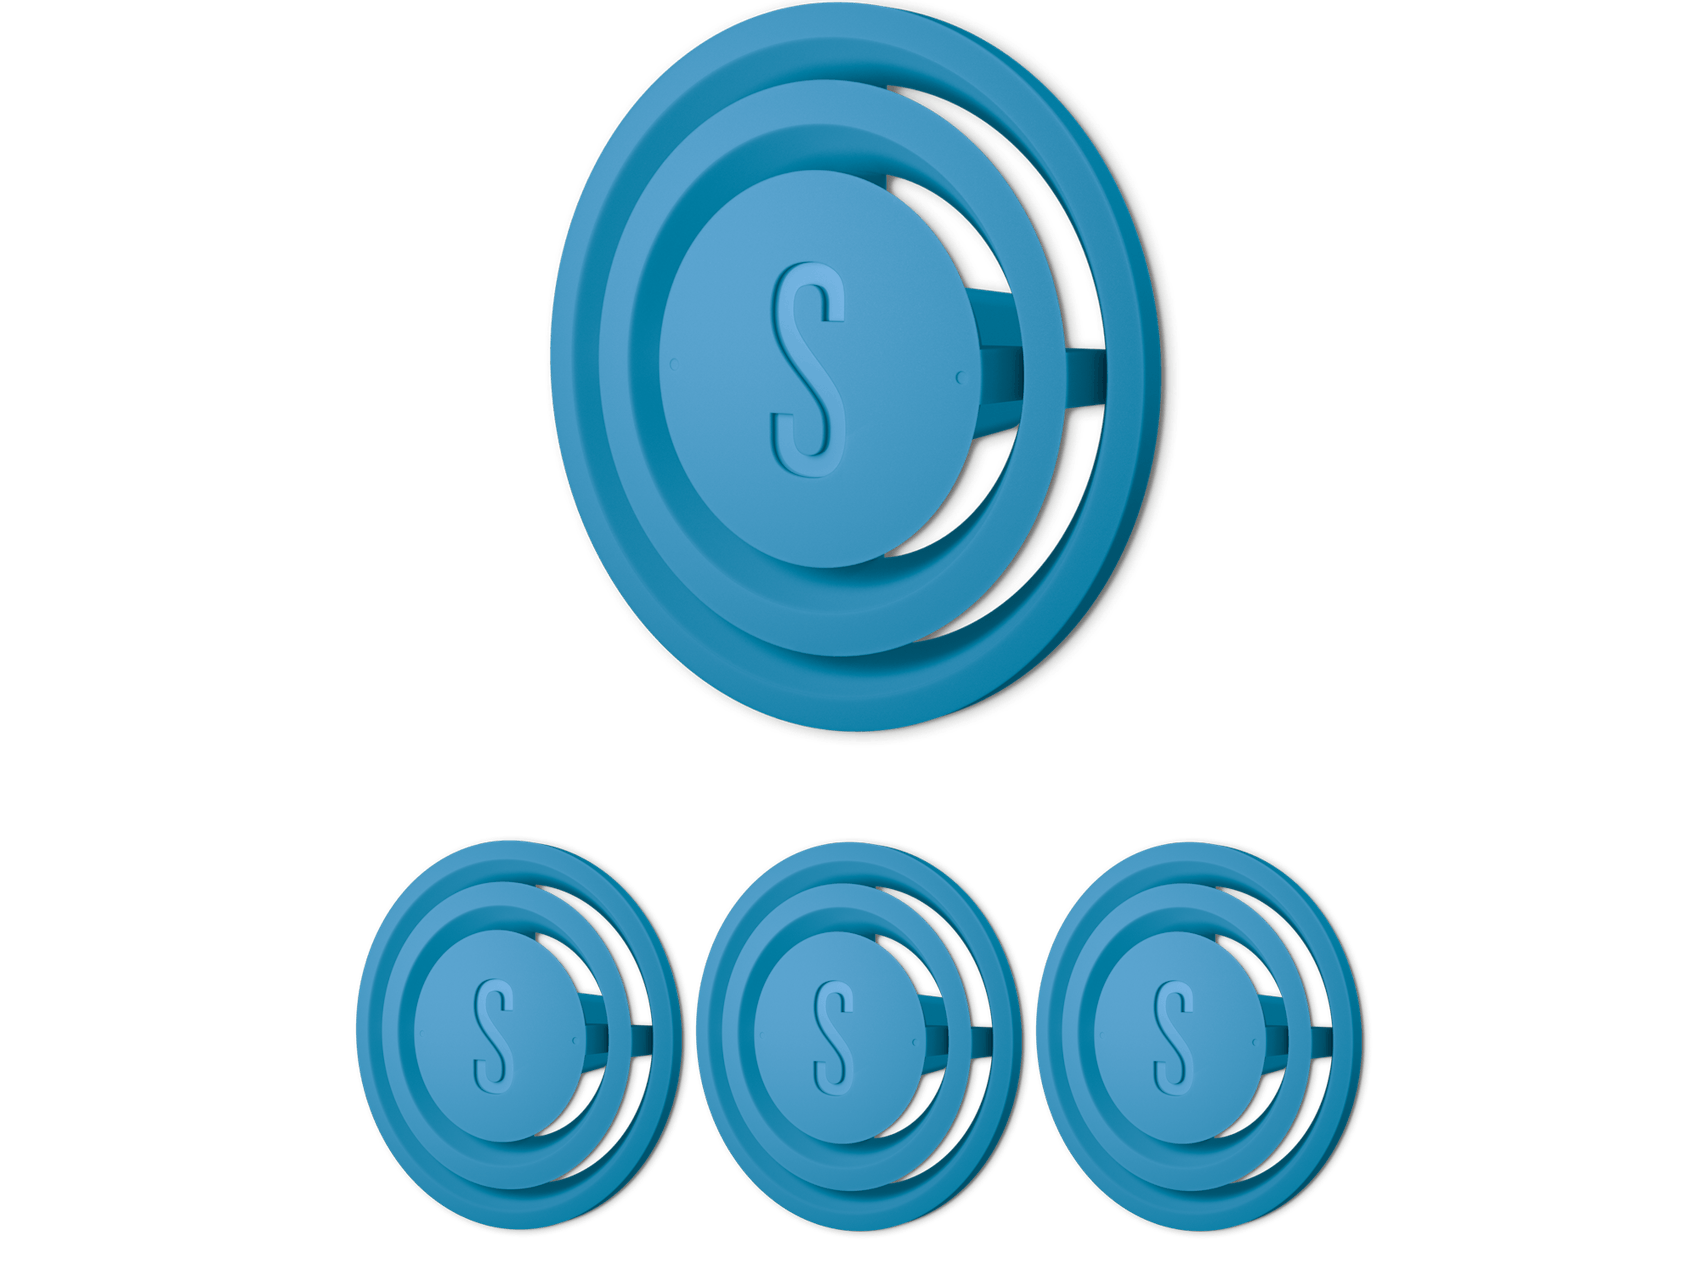 Blue Rosewood fragrance pin pack of 4 by Stadler Form